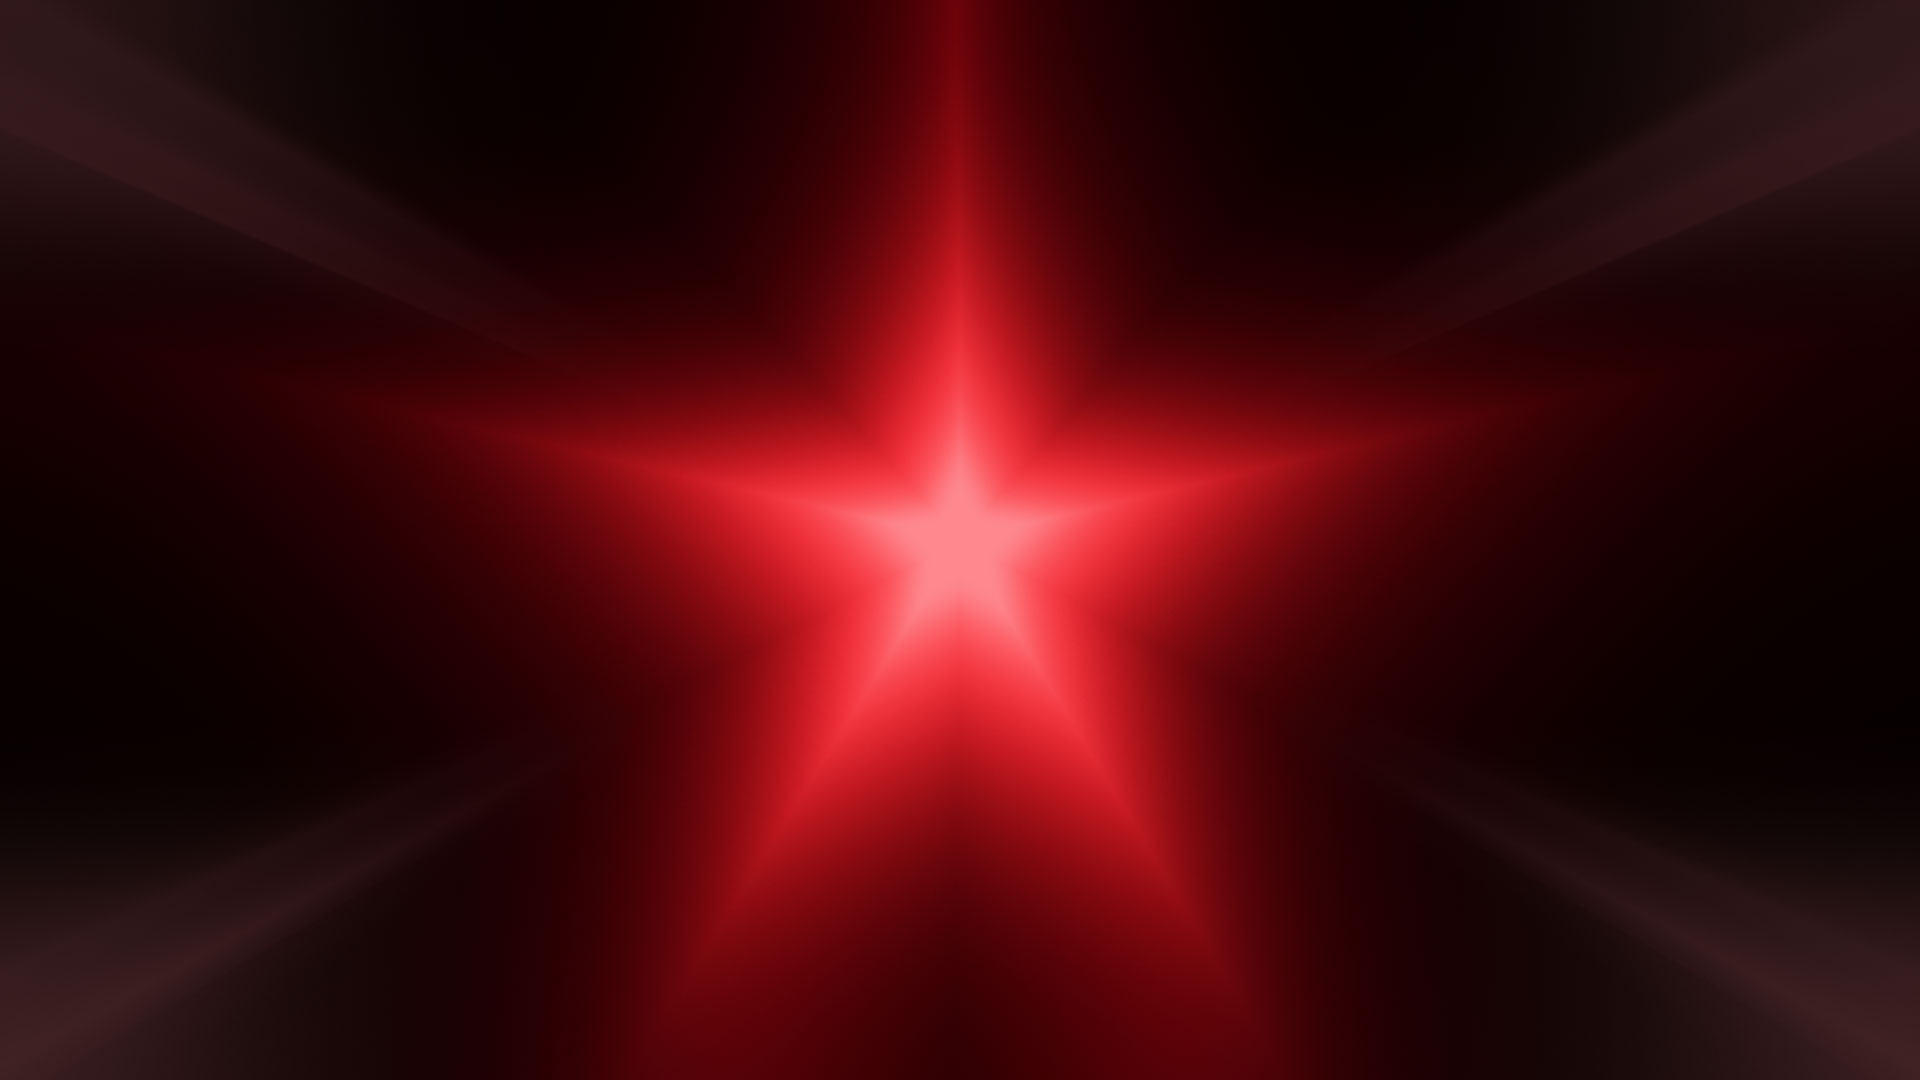 red star burst background image